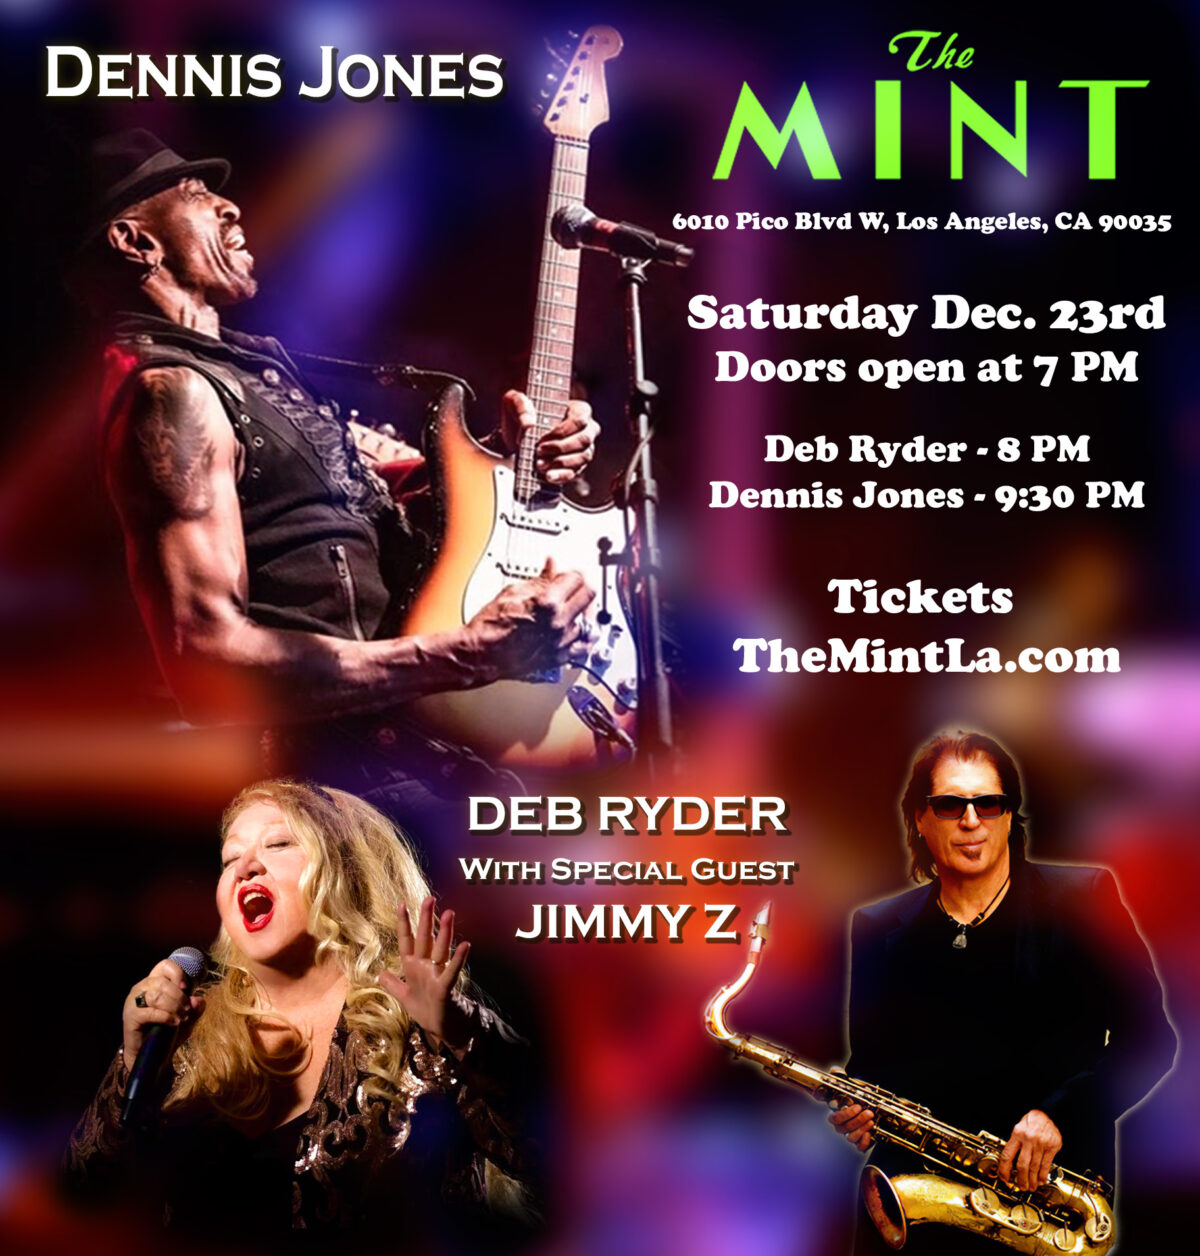 TheMint - Dennis Jones, Deb Rydar, Jimmy Z